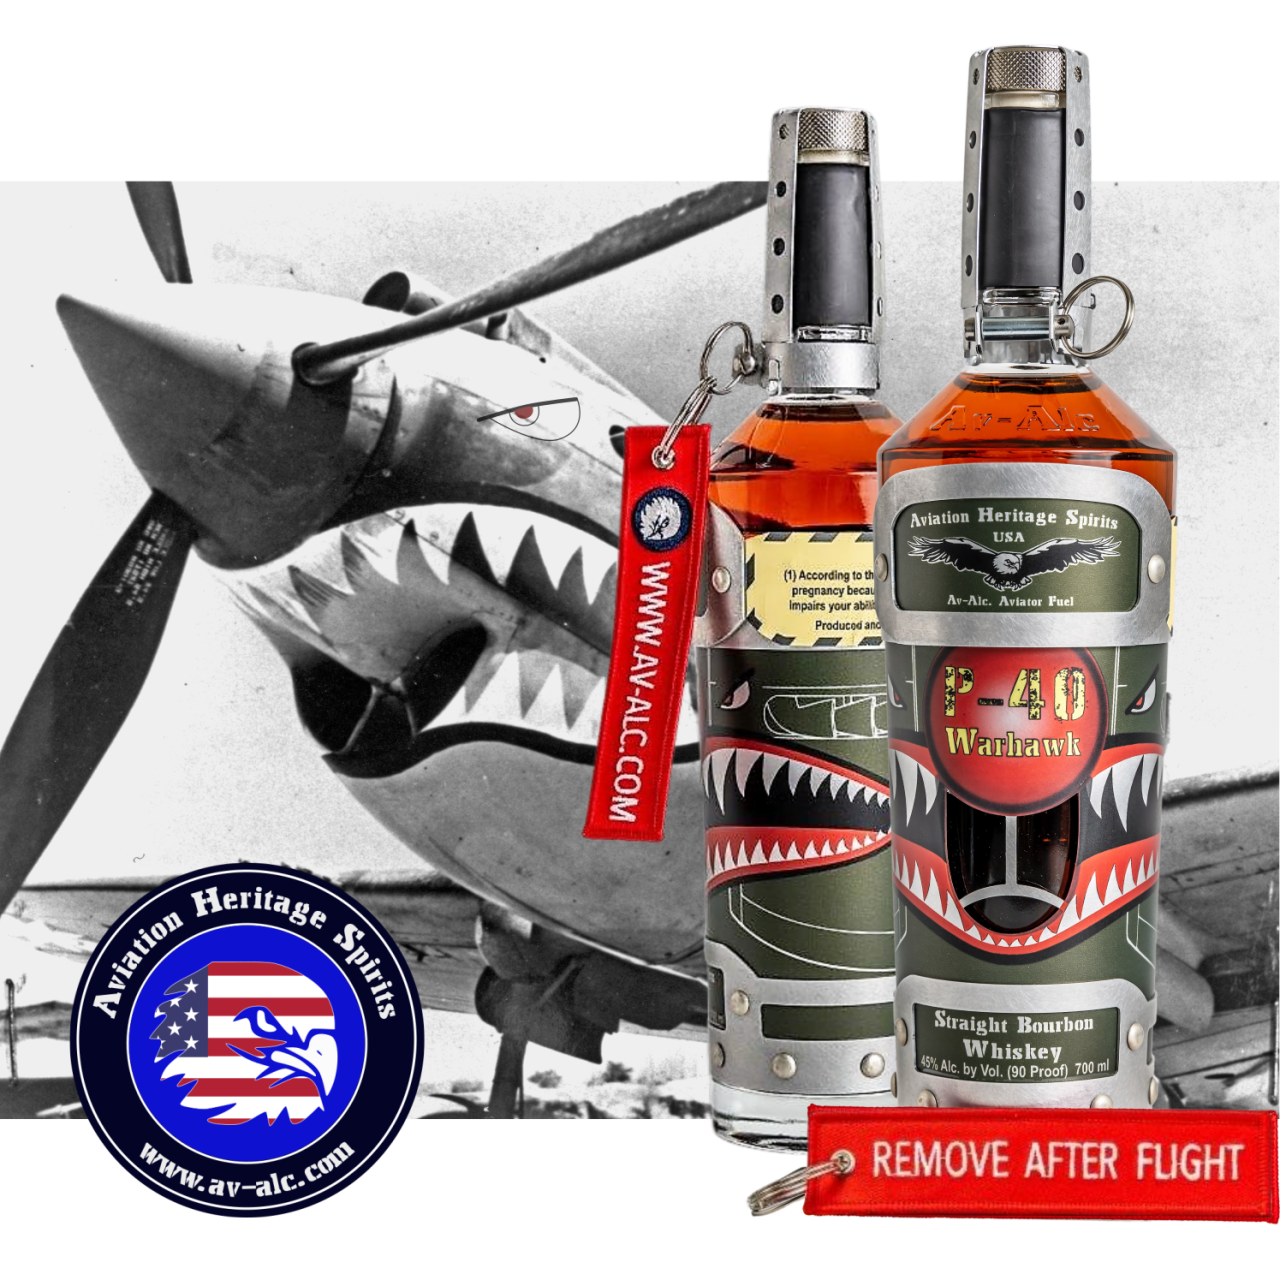 Curtiss P40 Shark Mouth, Texas Straight Bourbon Whiskey